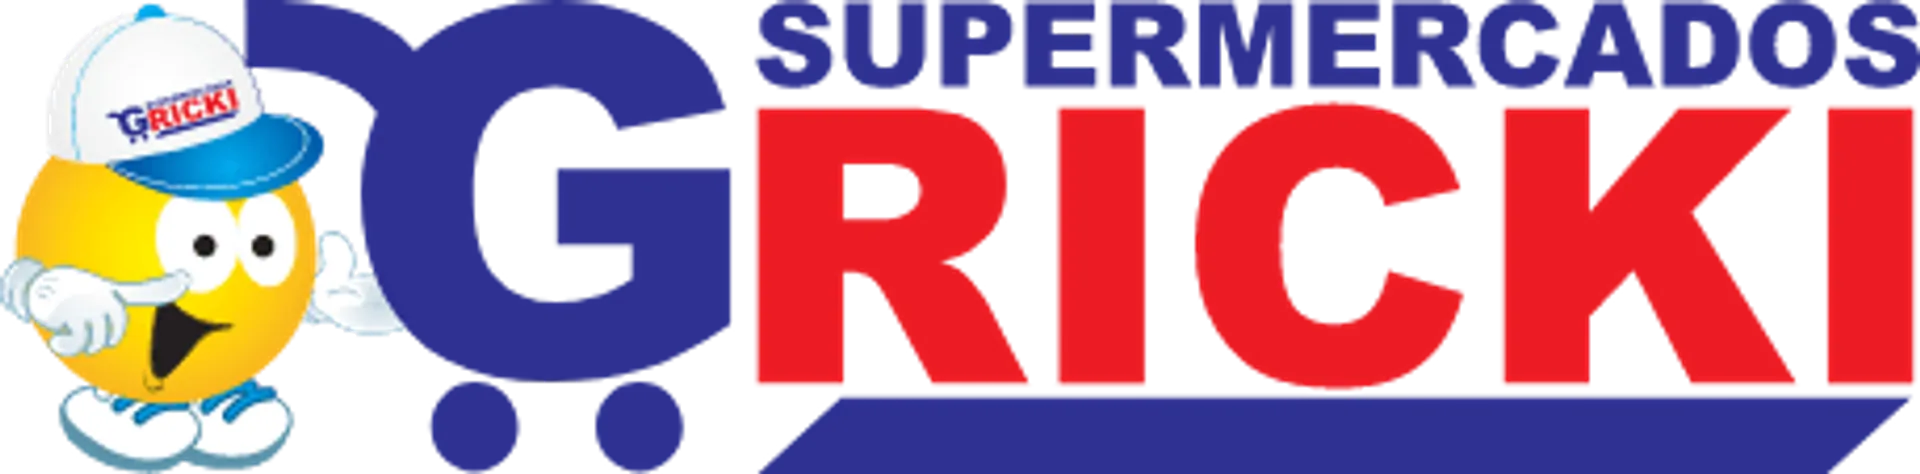 SUPERMERCADOS GRICKI logo